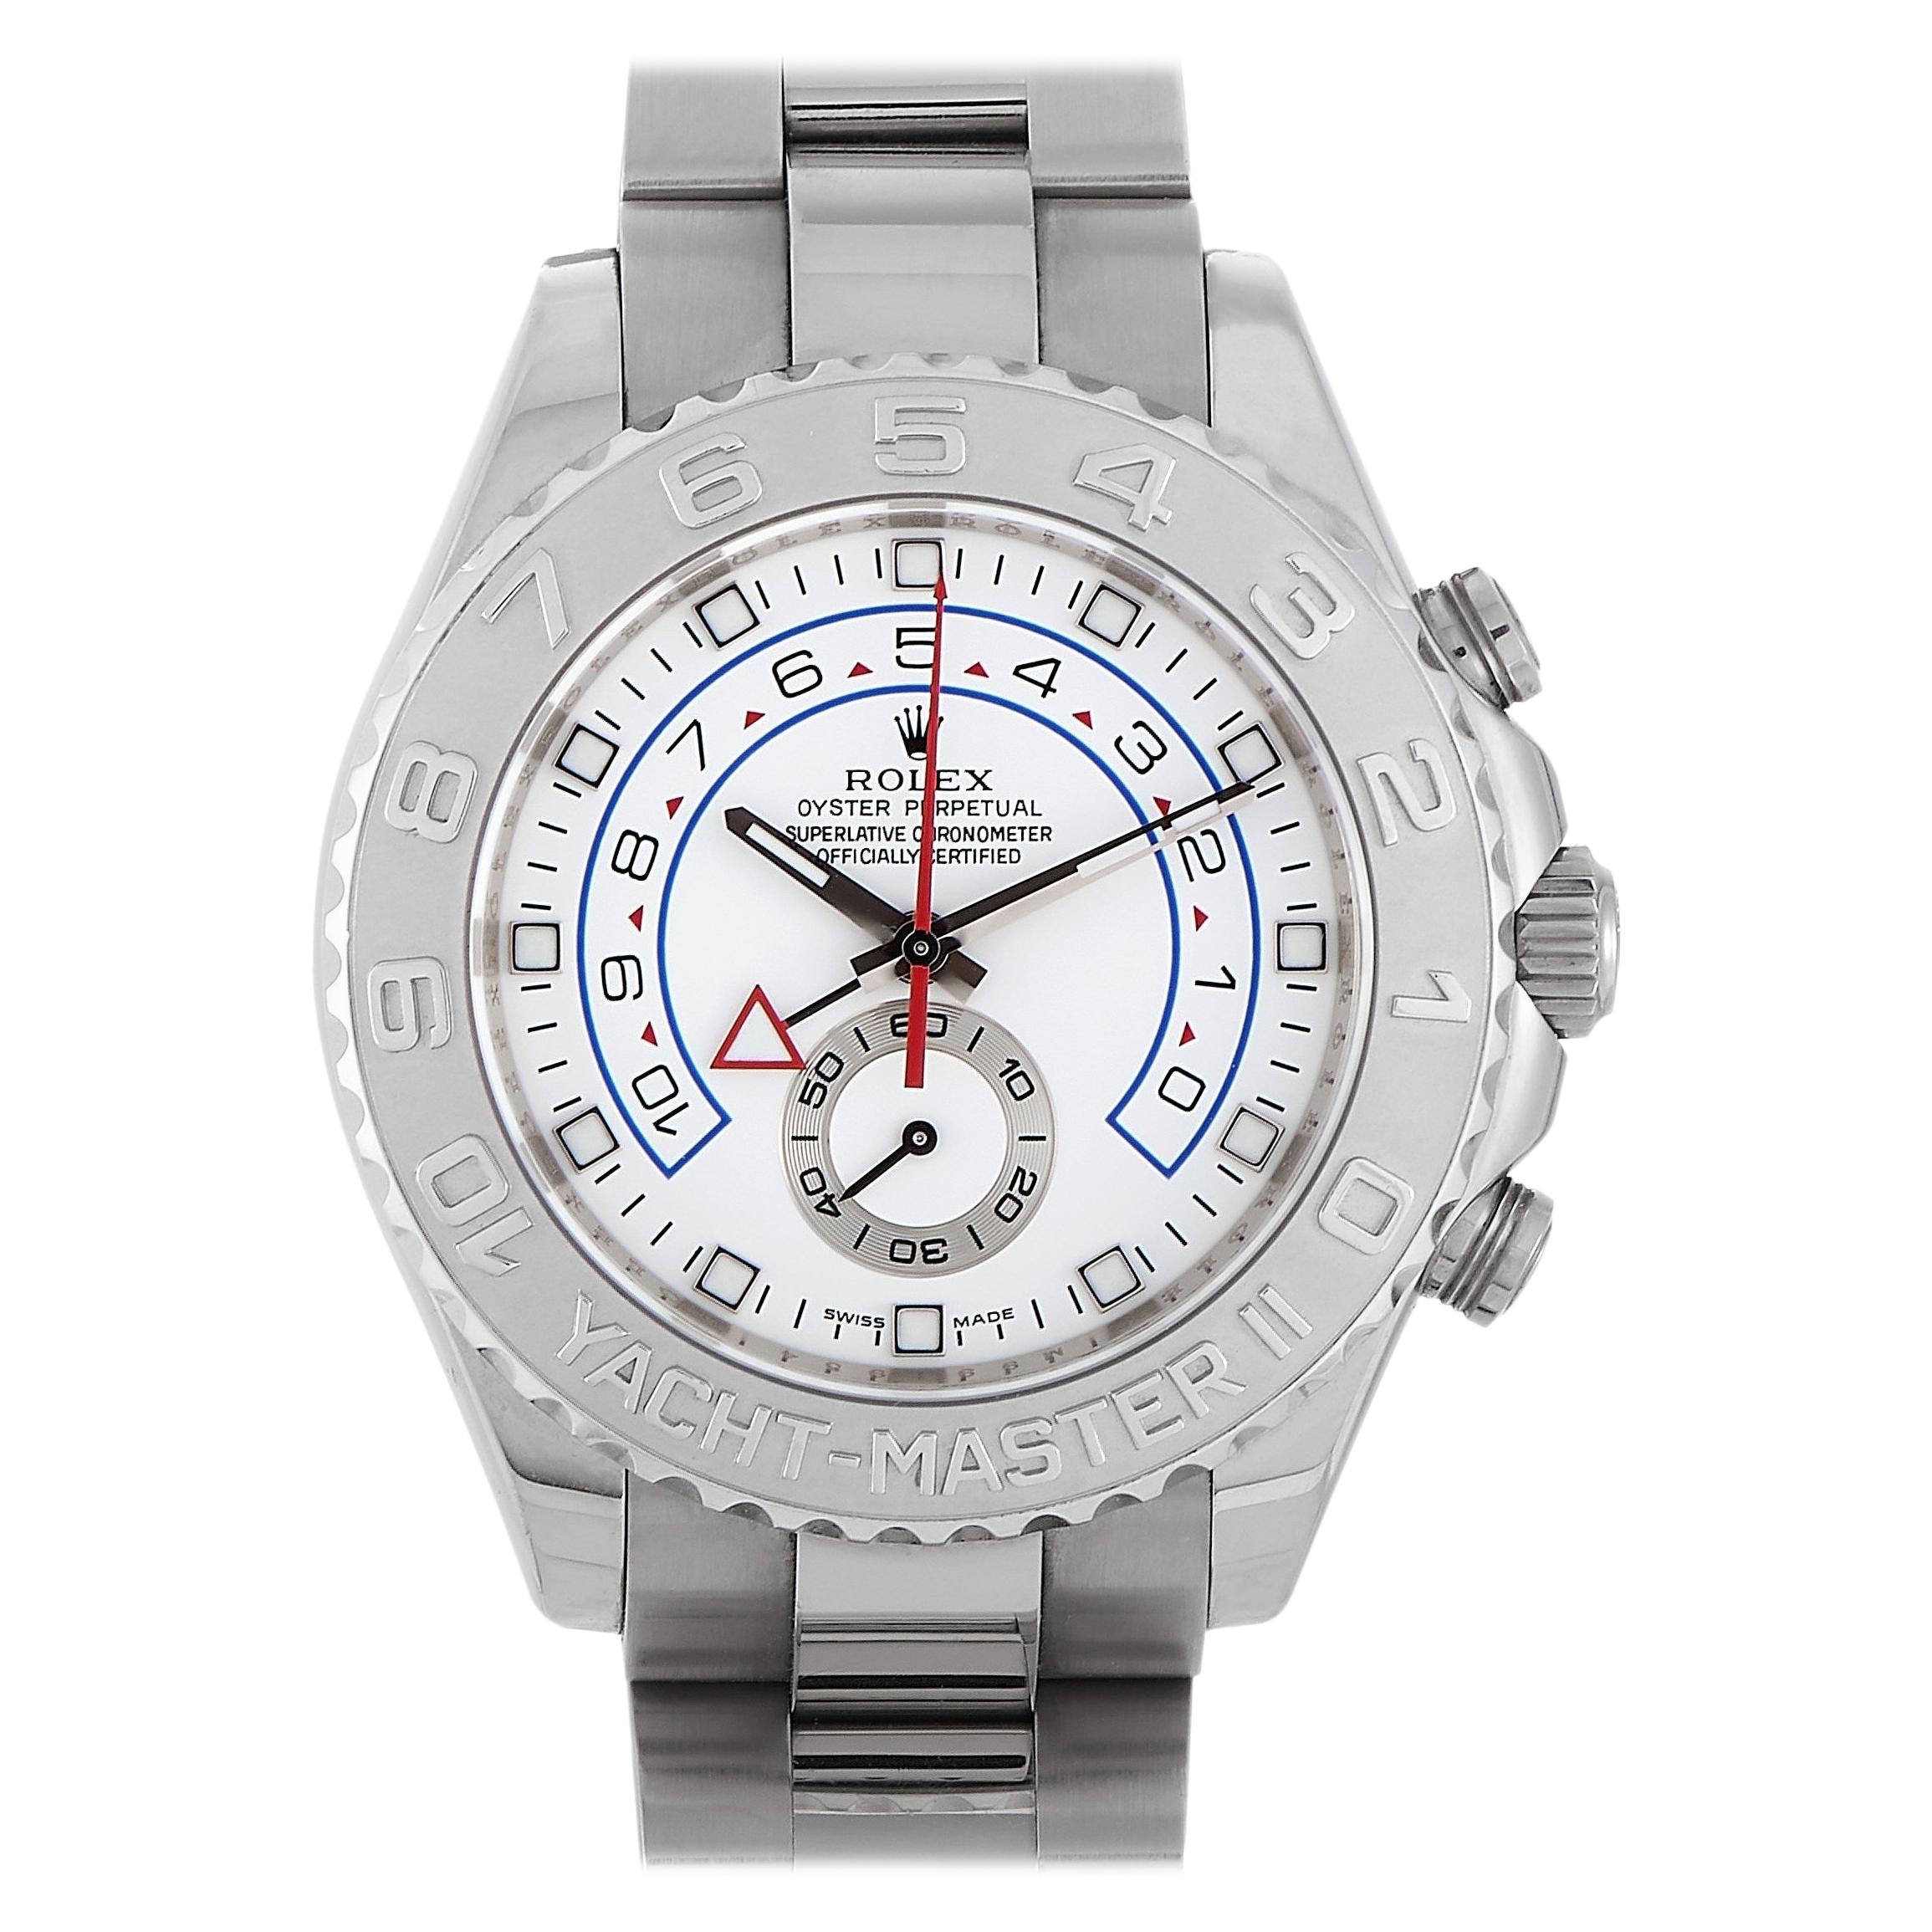 Rolex Yacht-Master II 18K White Gold and Platinum Watch 116689